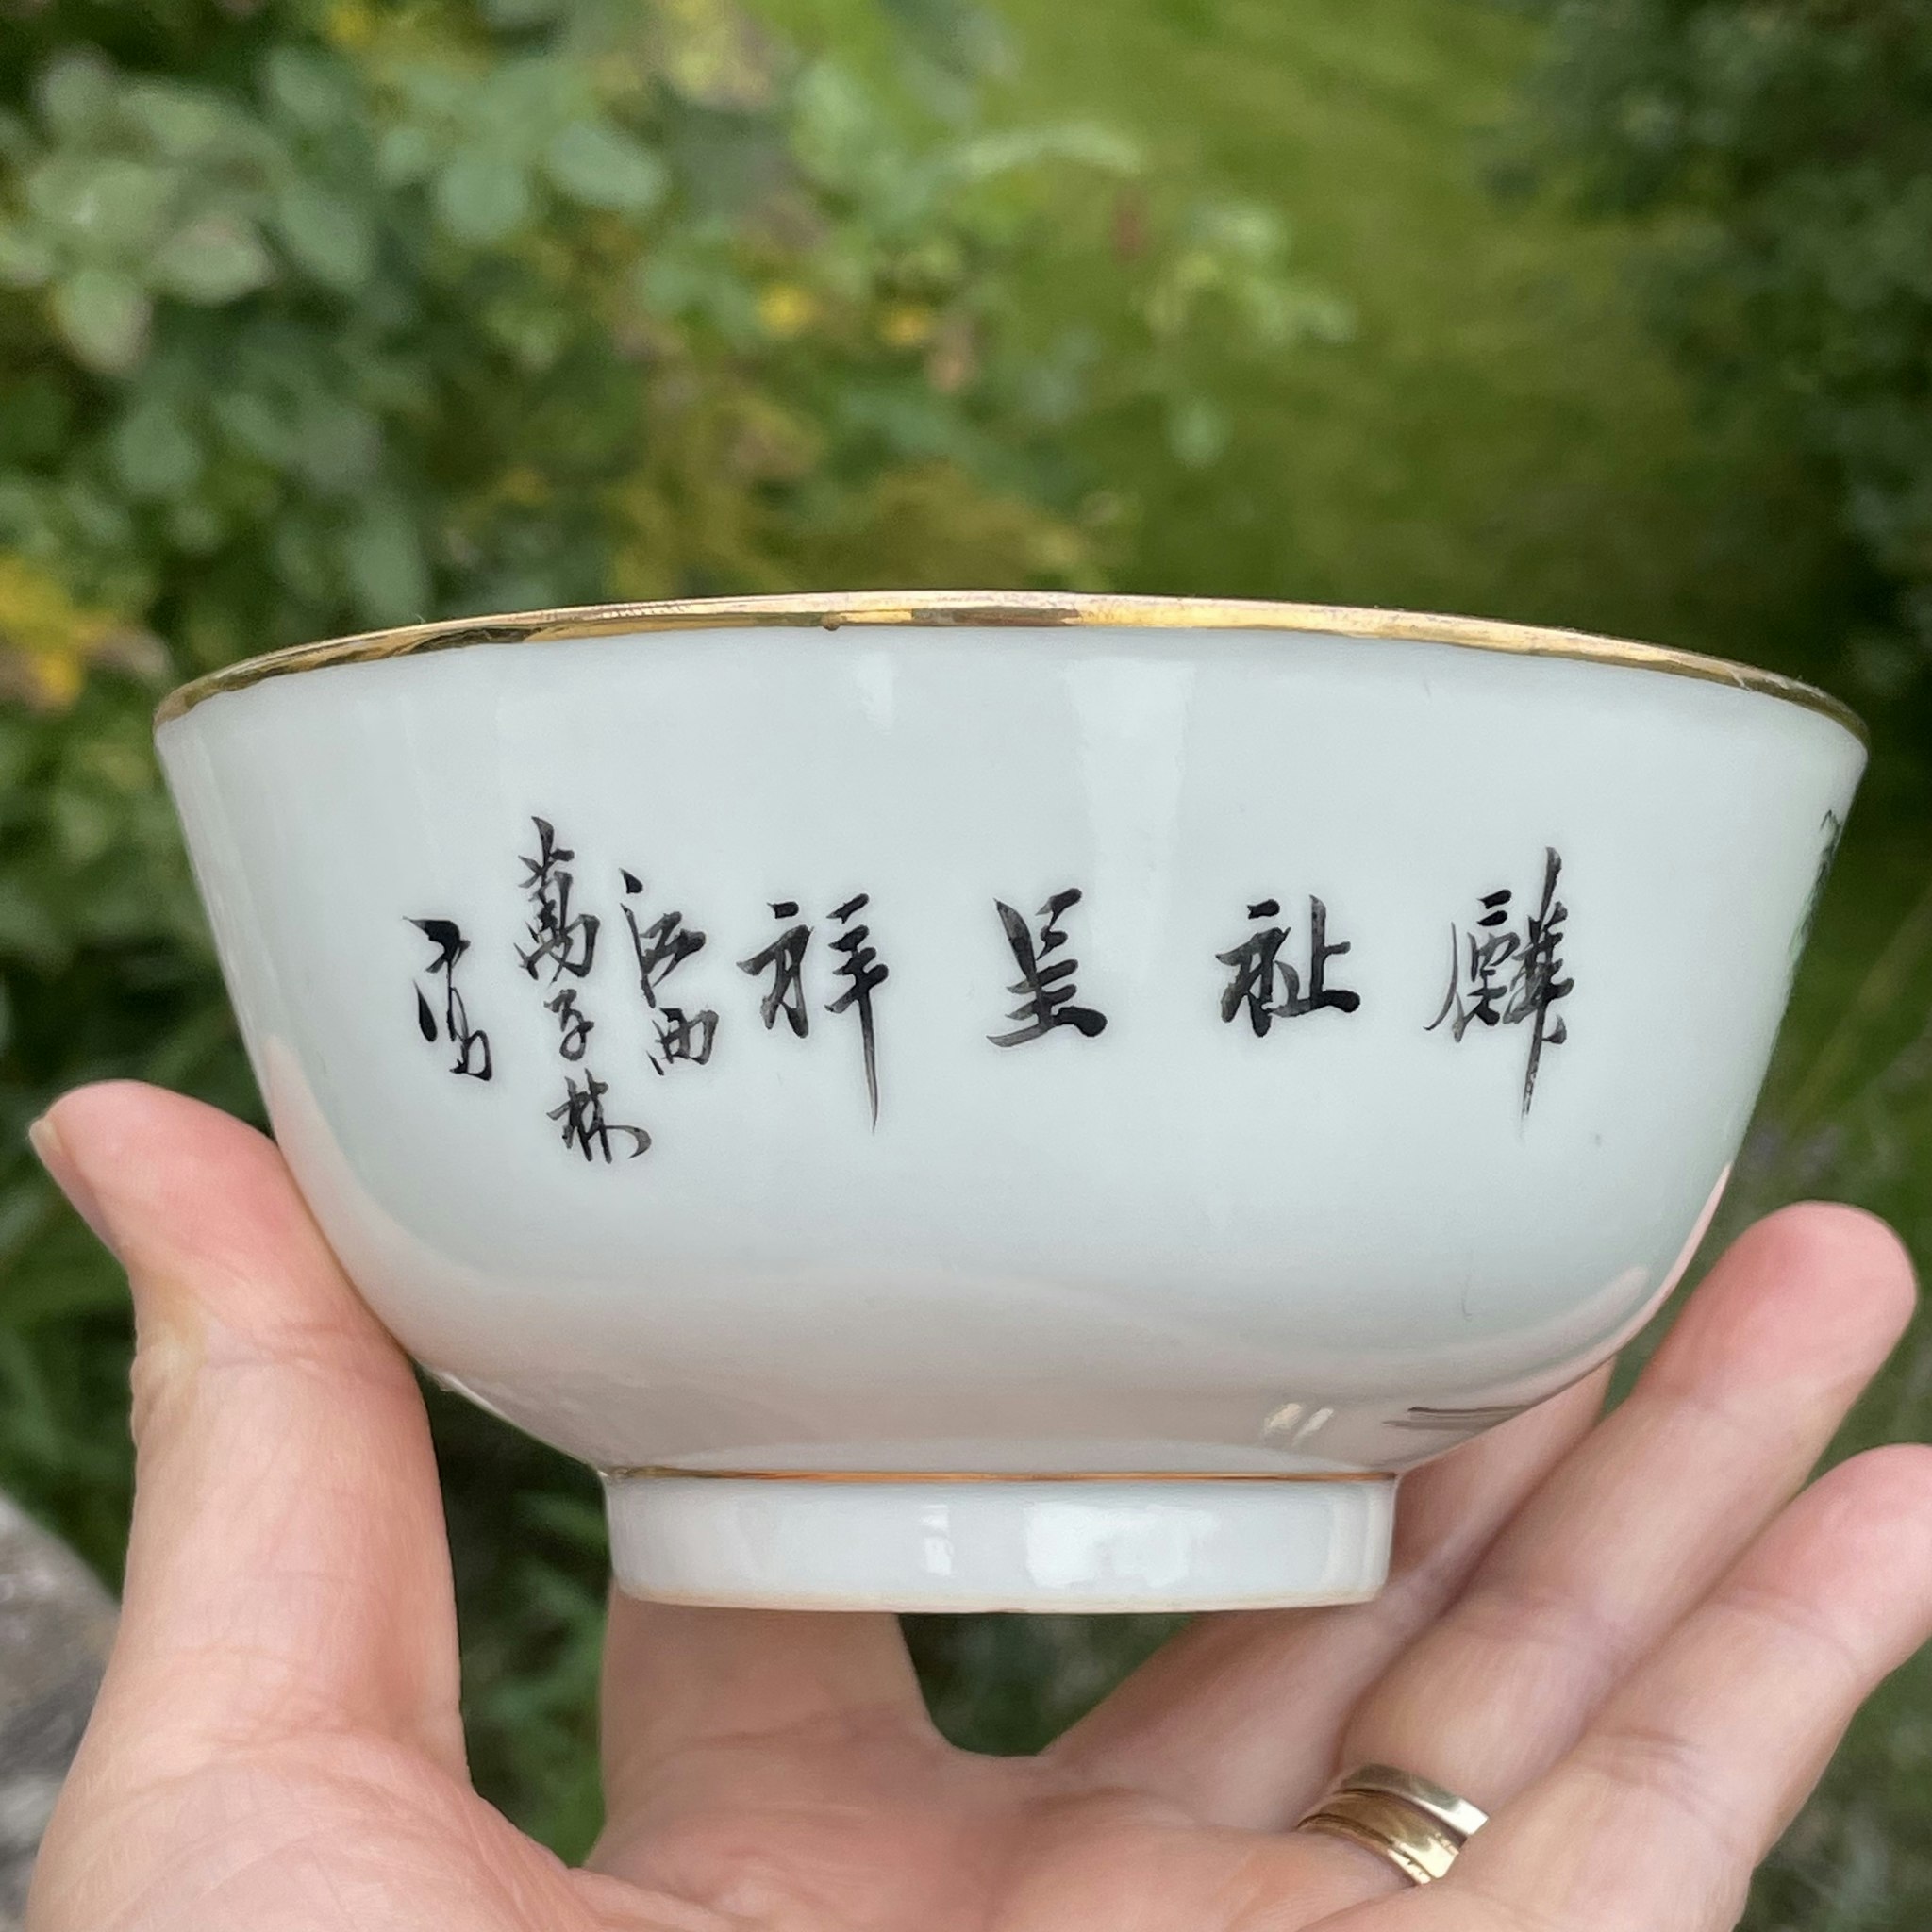 Chinese antique bowl, republic period  #1631